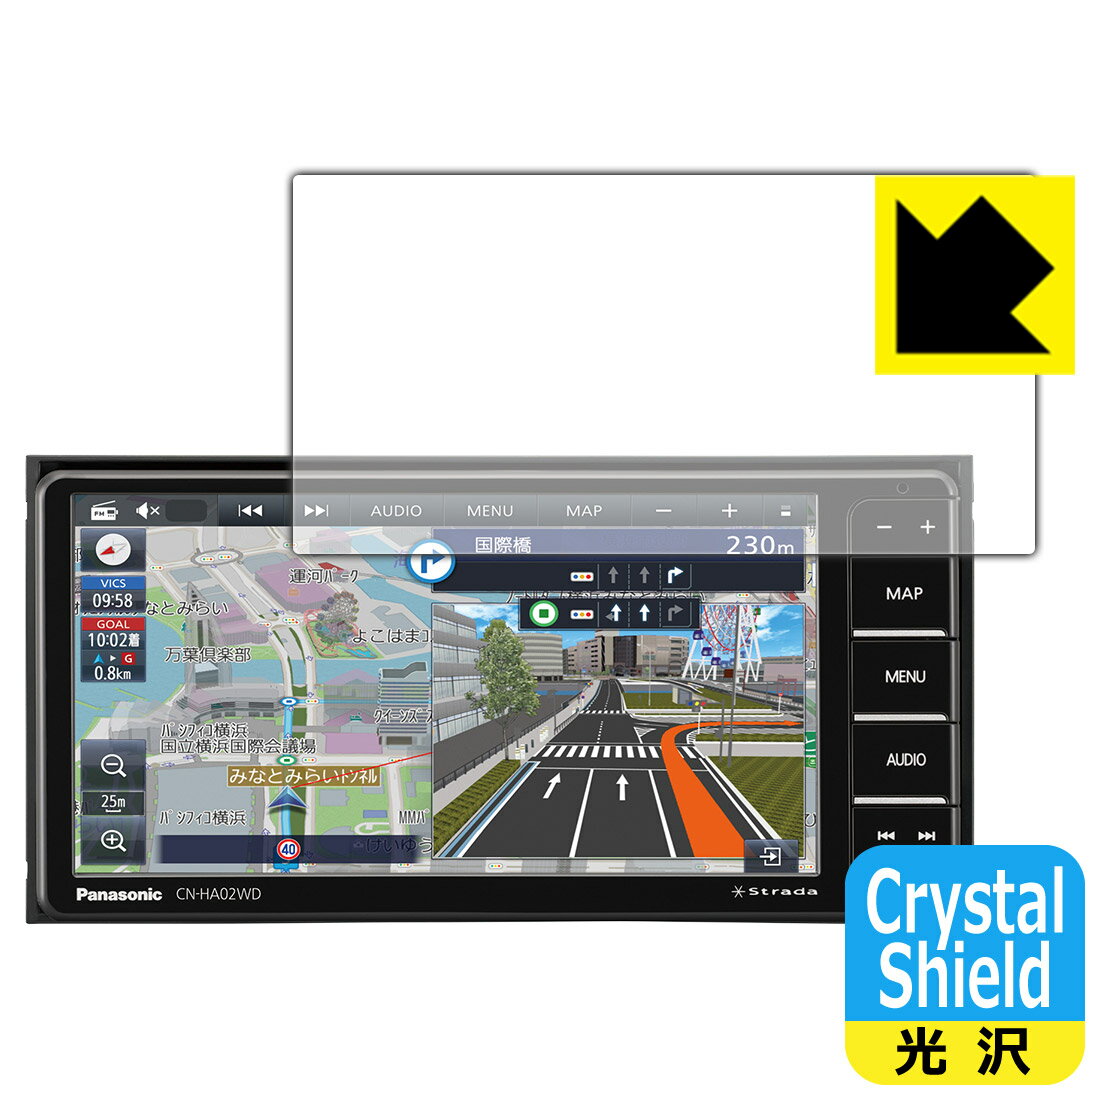 Crystal ShieldyzیtB J[ir Strada CN-HA02WD / CN-HA02D / CN-HE02WD / CN-HE02D { А